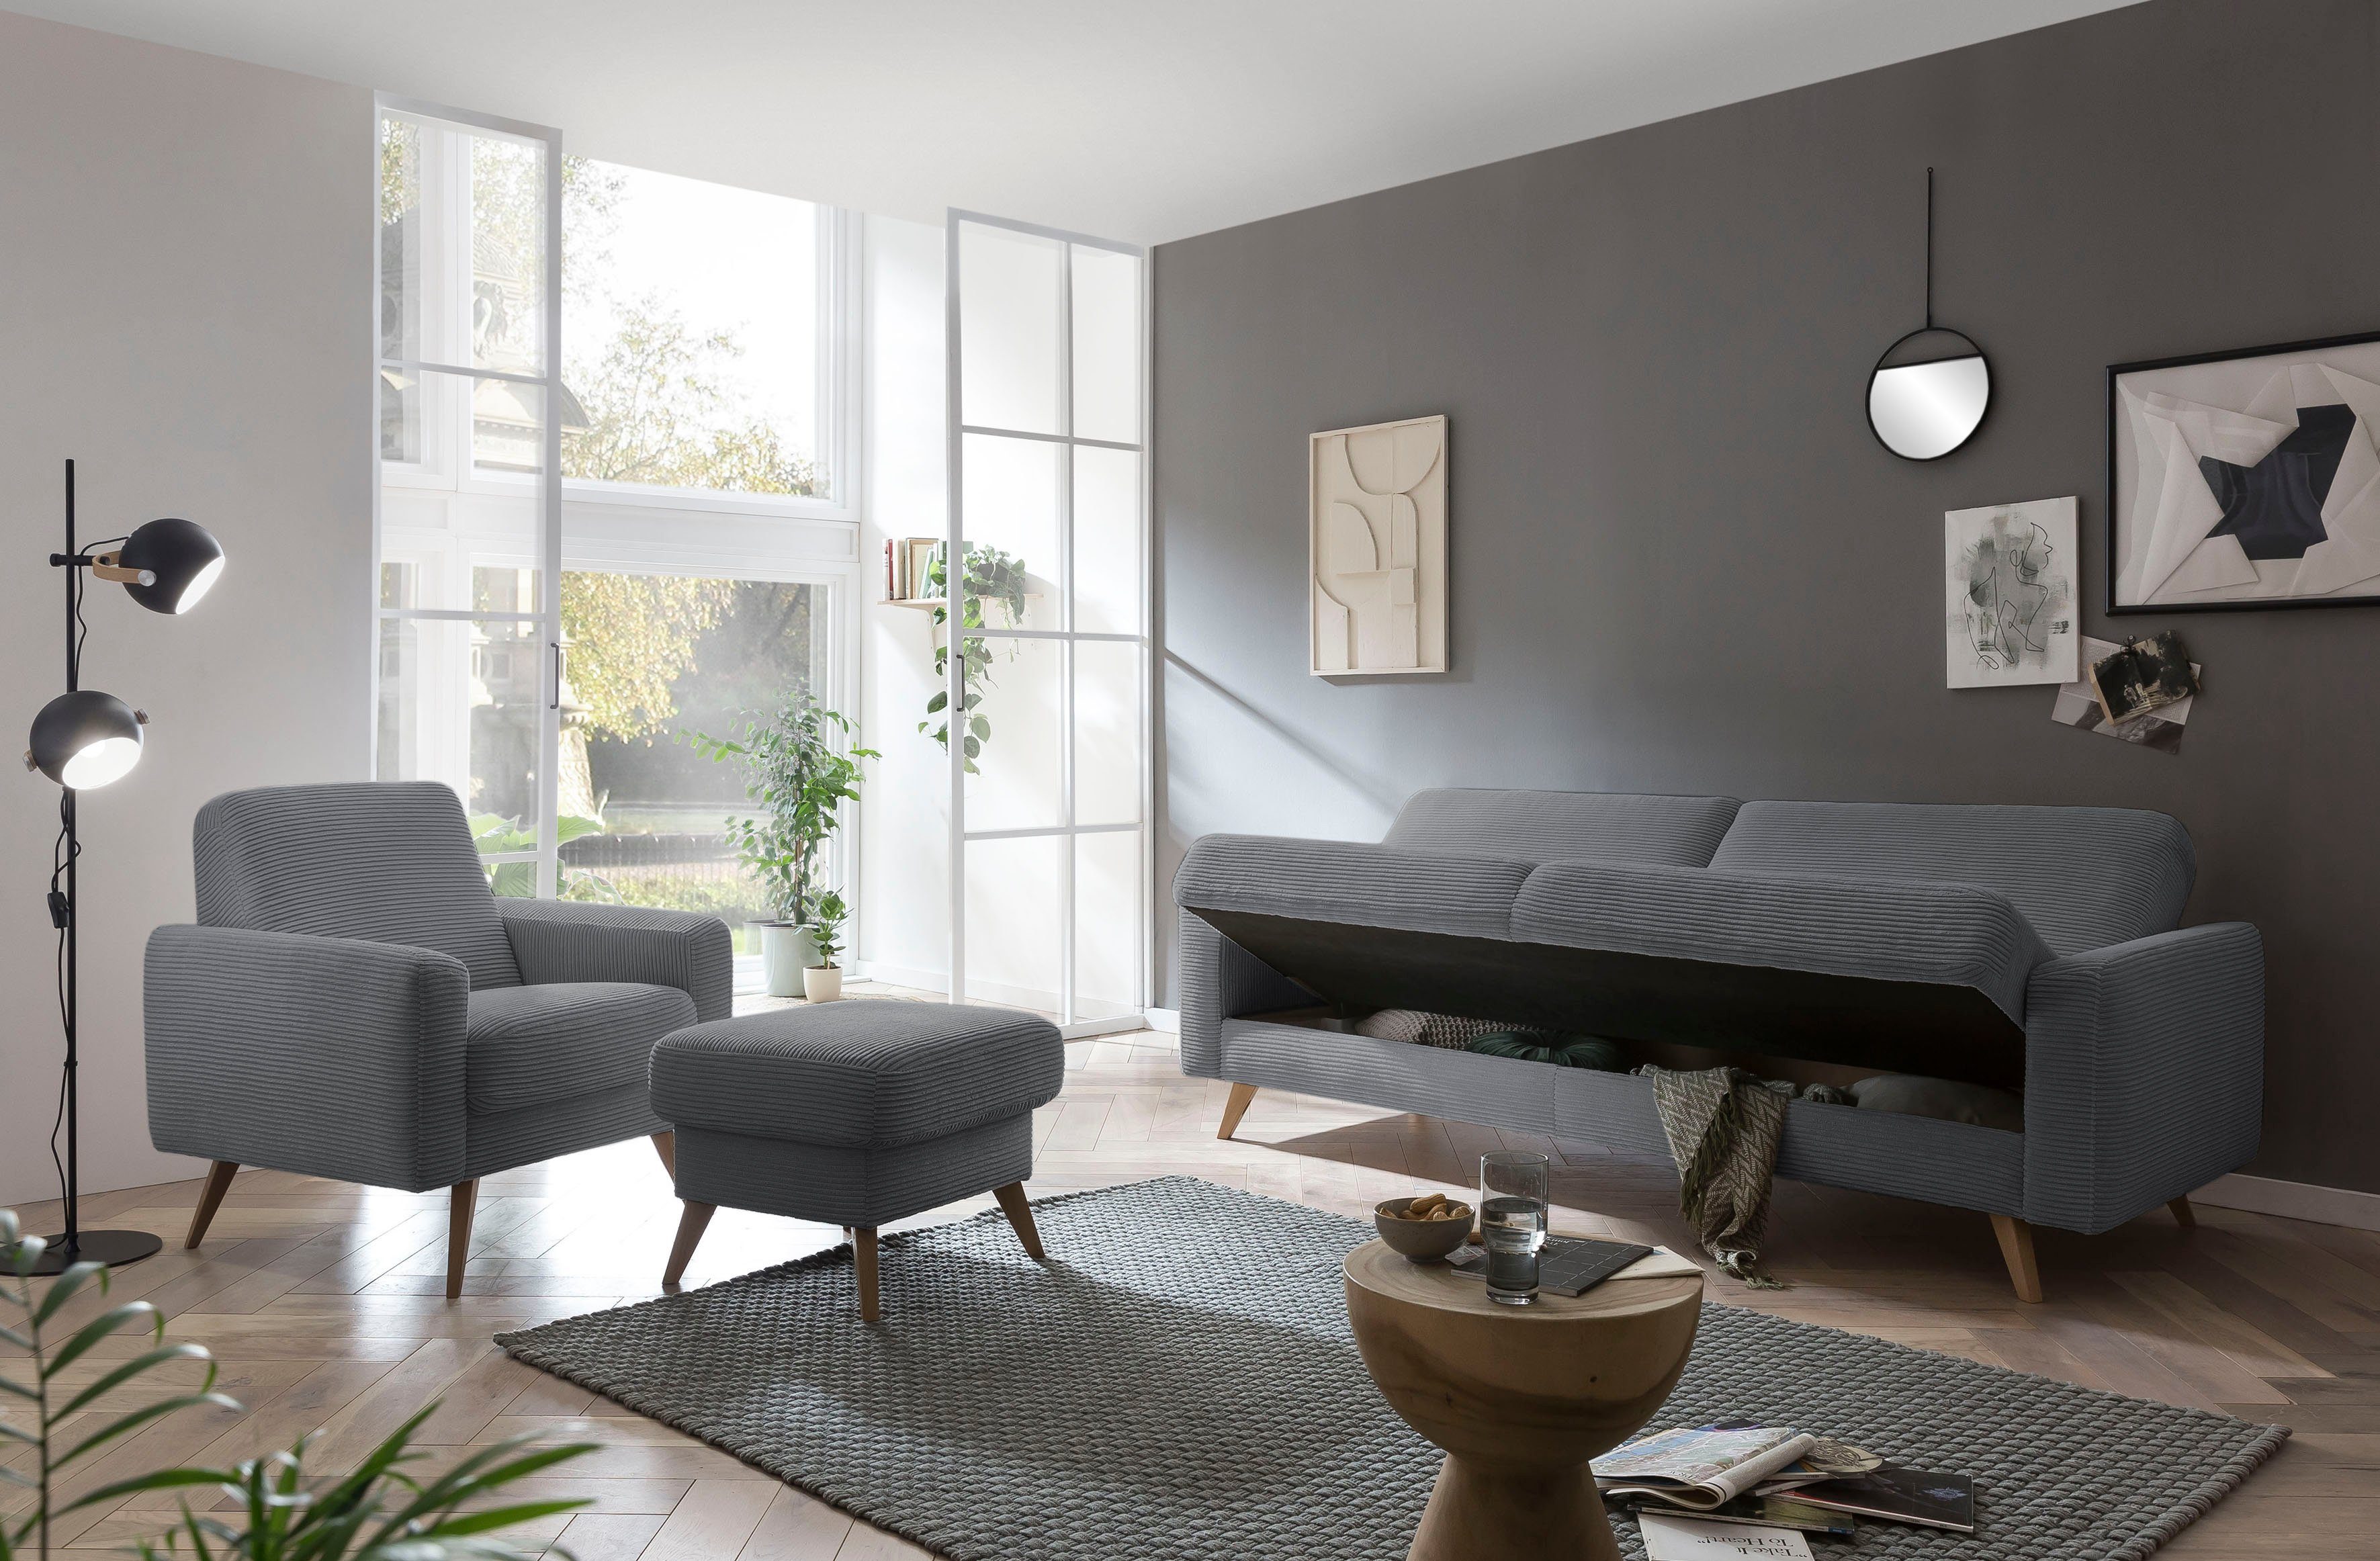 Bettkasten 3-Sitzer sofa grey - Bettfunktion Samso, fashion und exxpo Inklusive